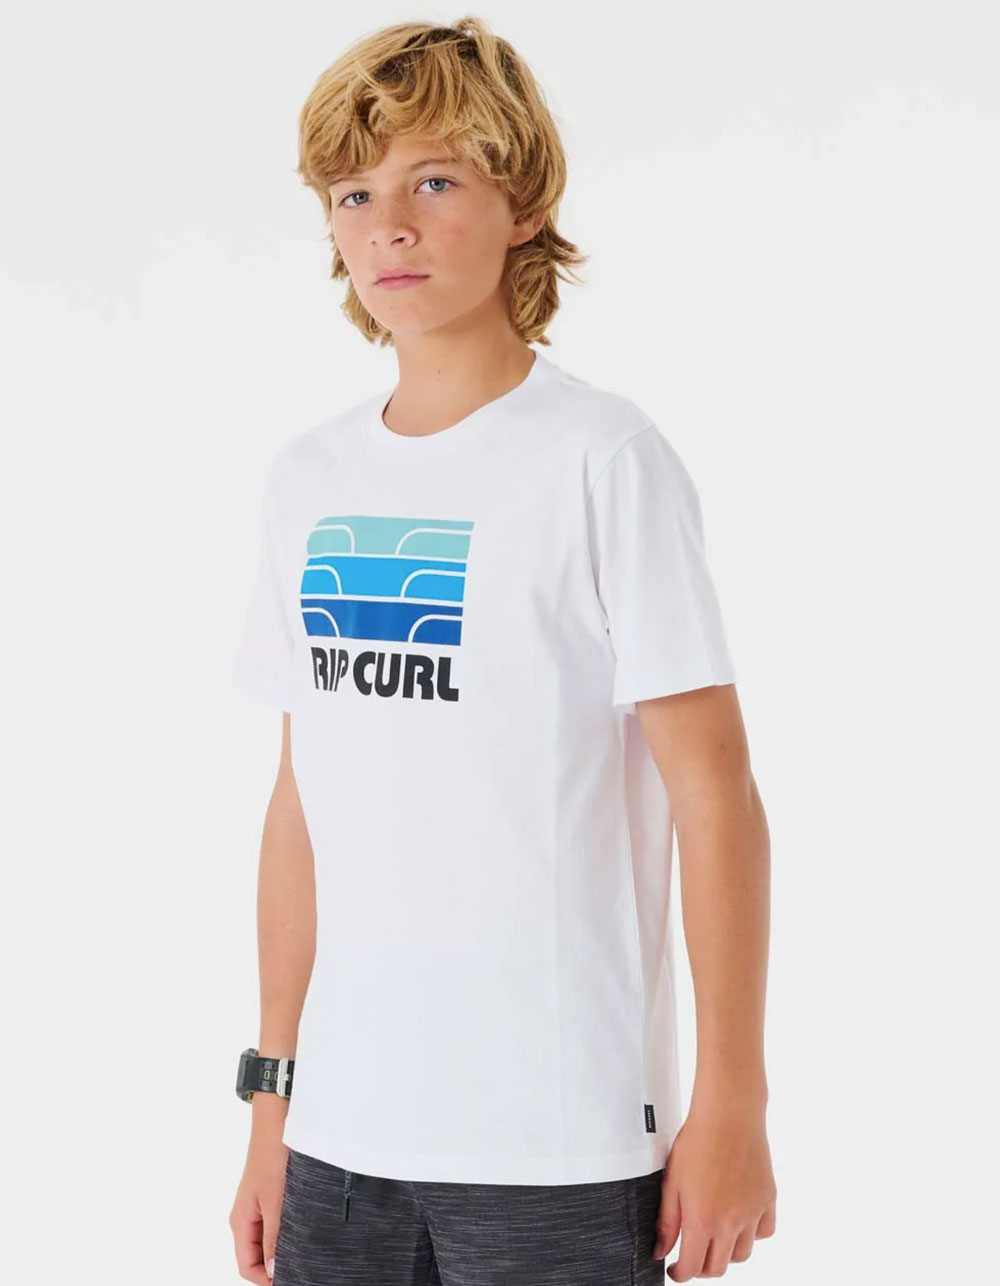 RIP CURL Surf Revival Mumma Boys Tee - WHITE | Tillys